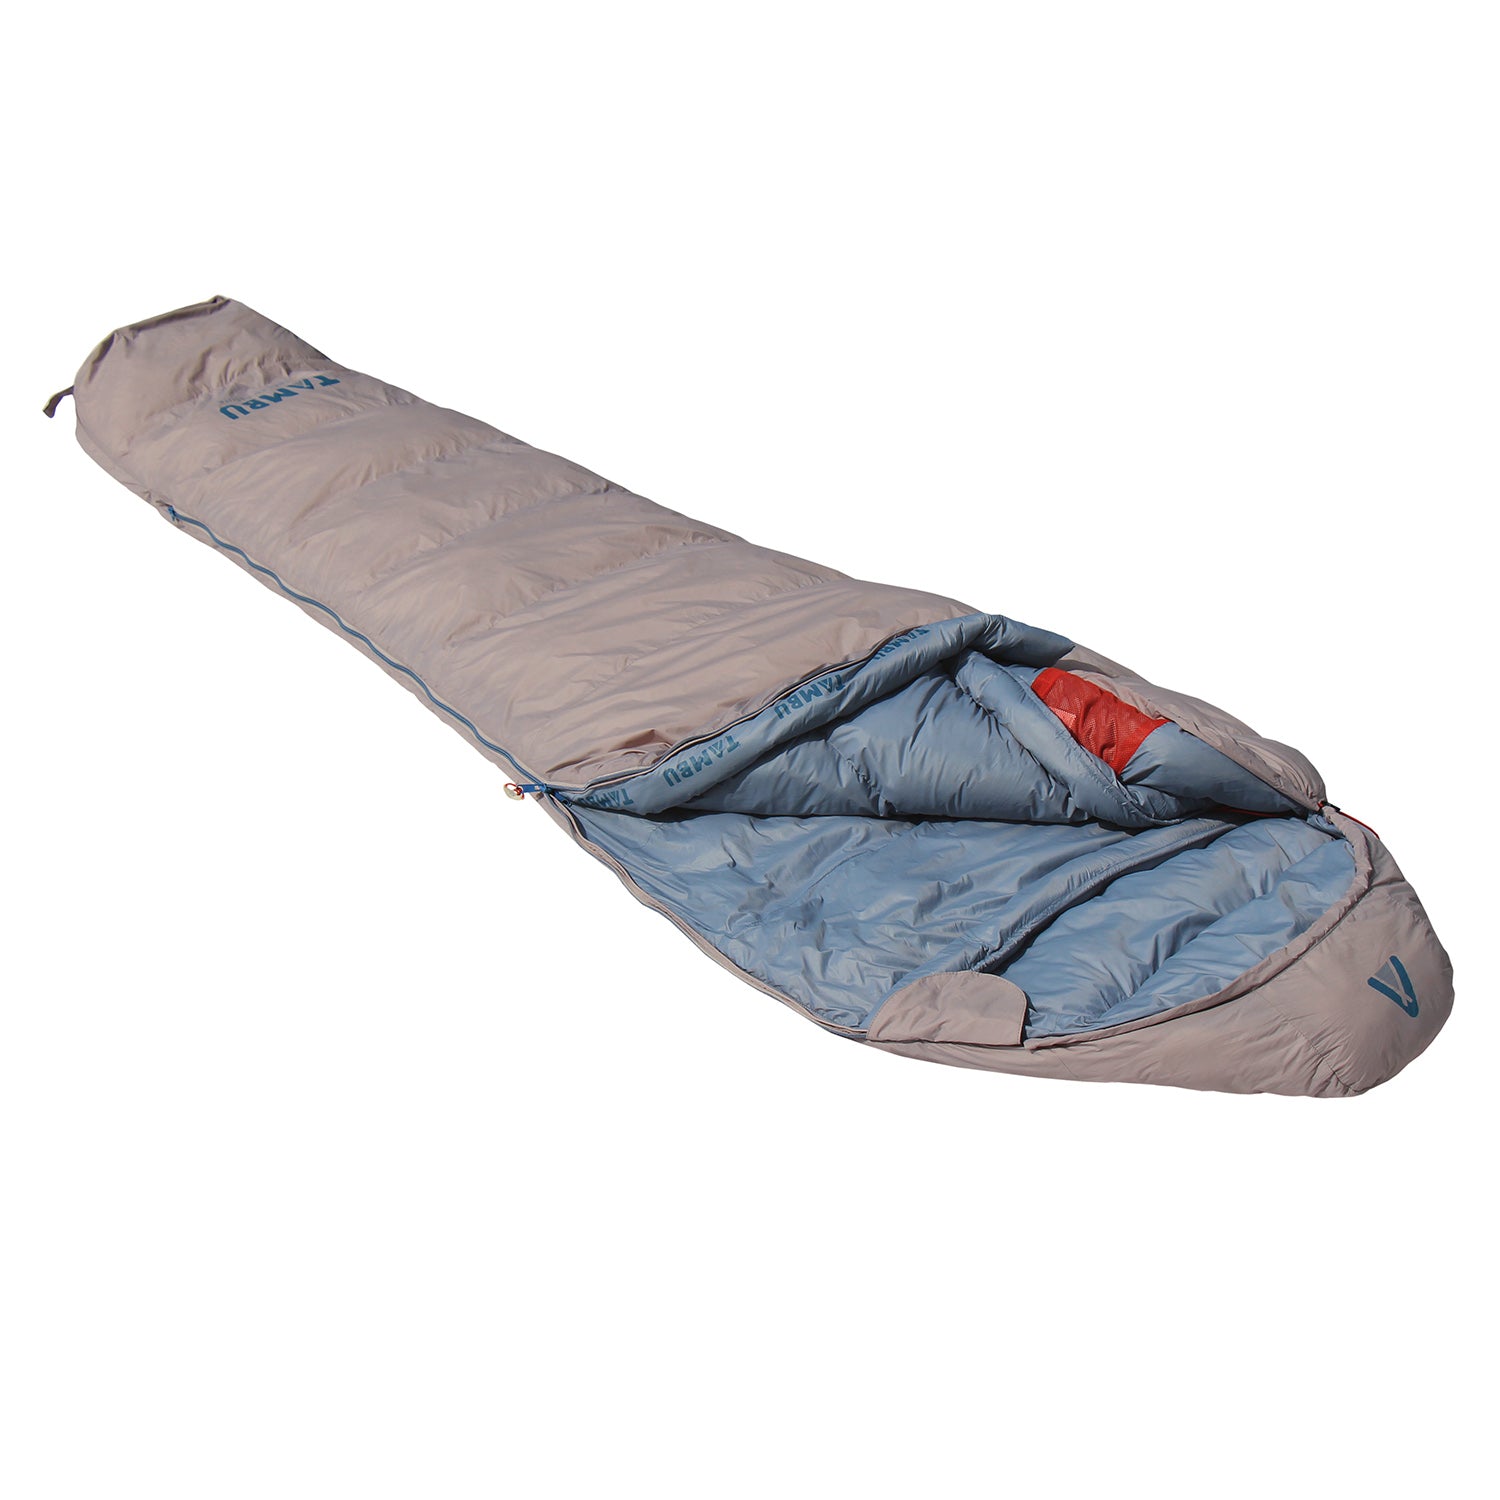 NARAM | mummy sleeping bag 1525 gr